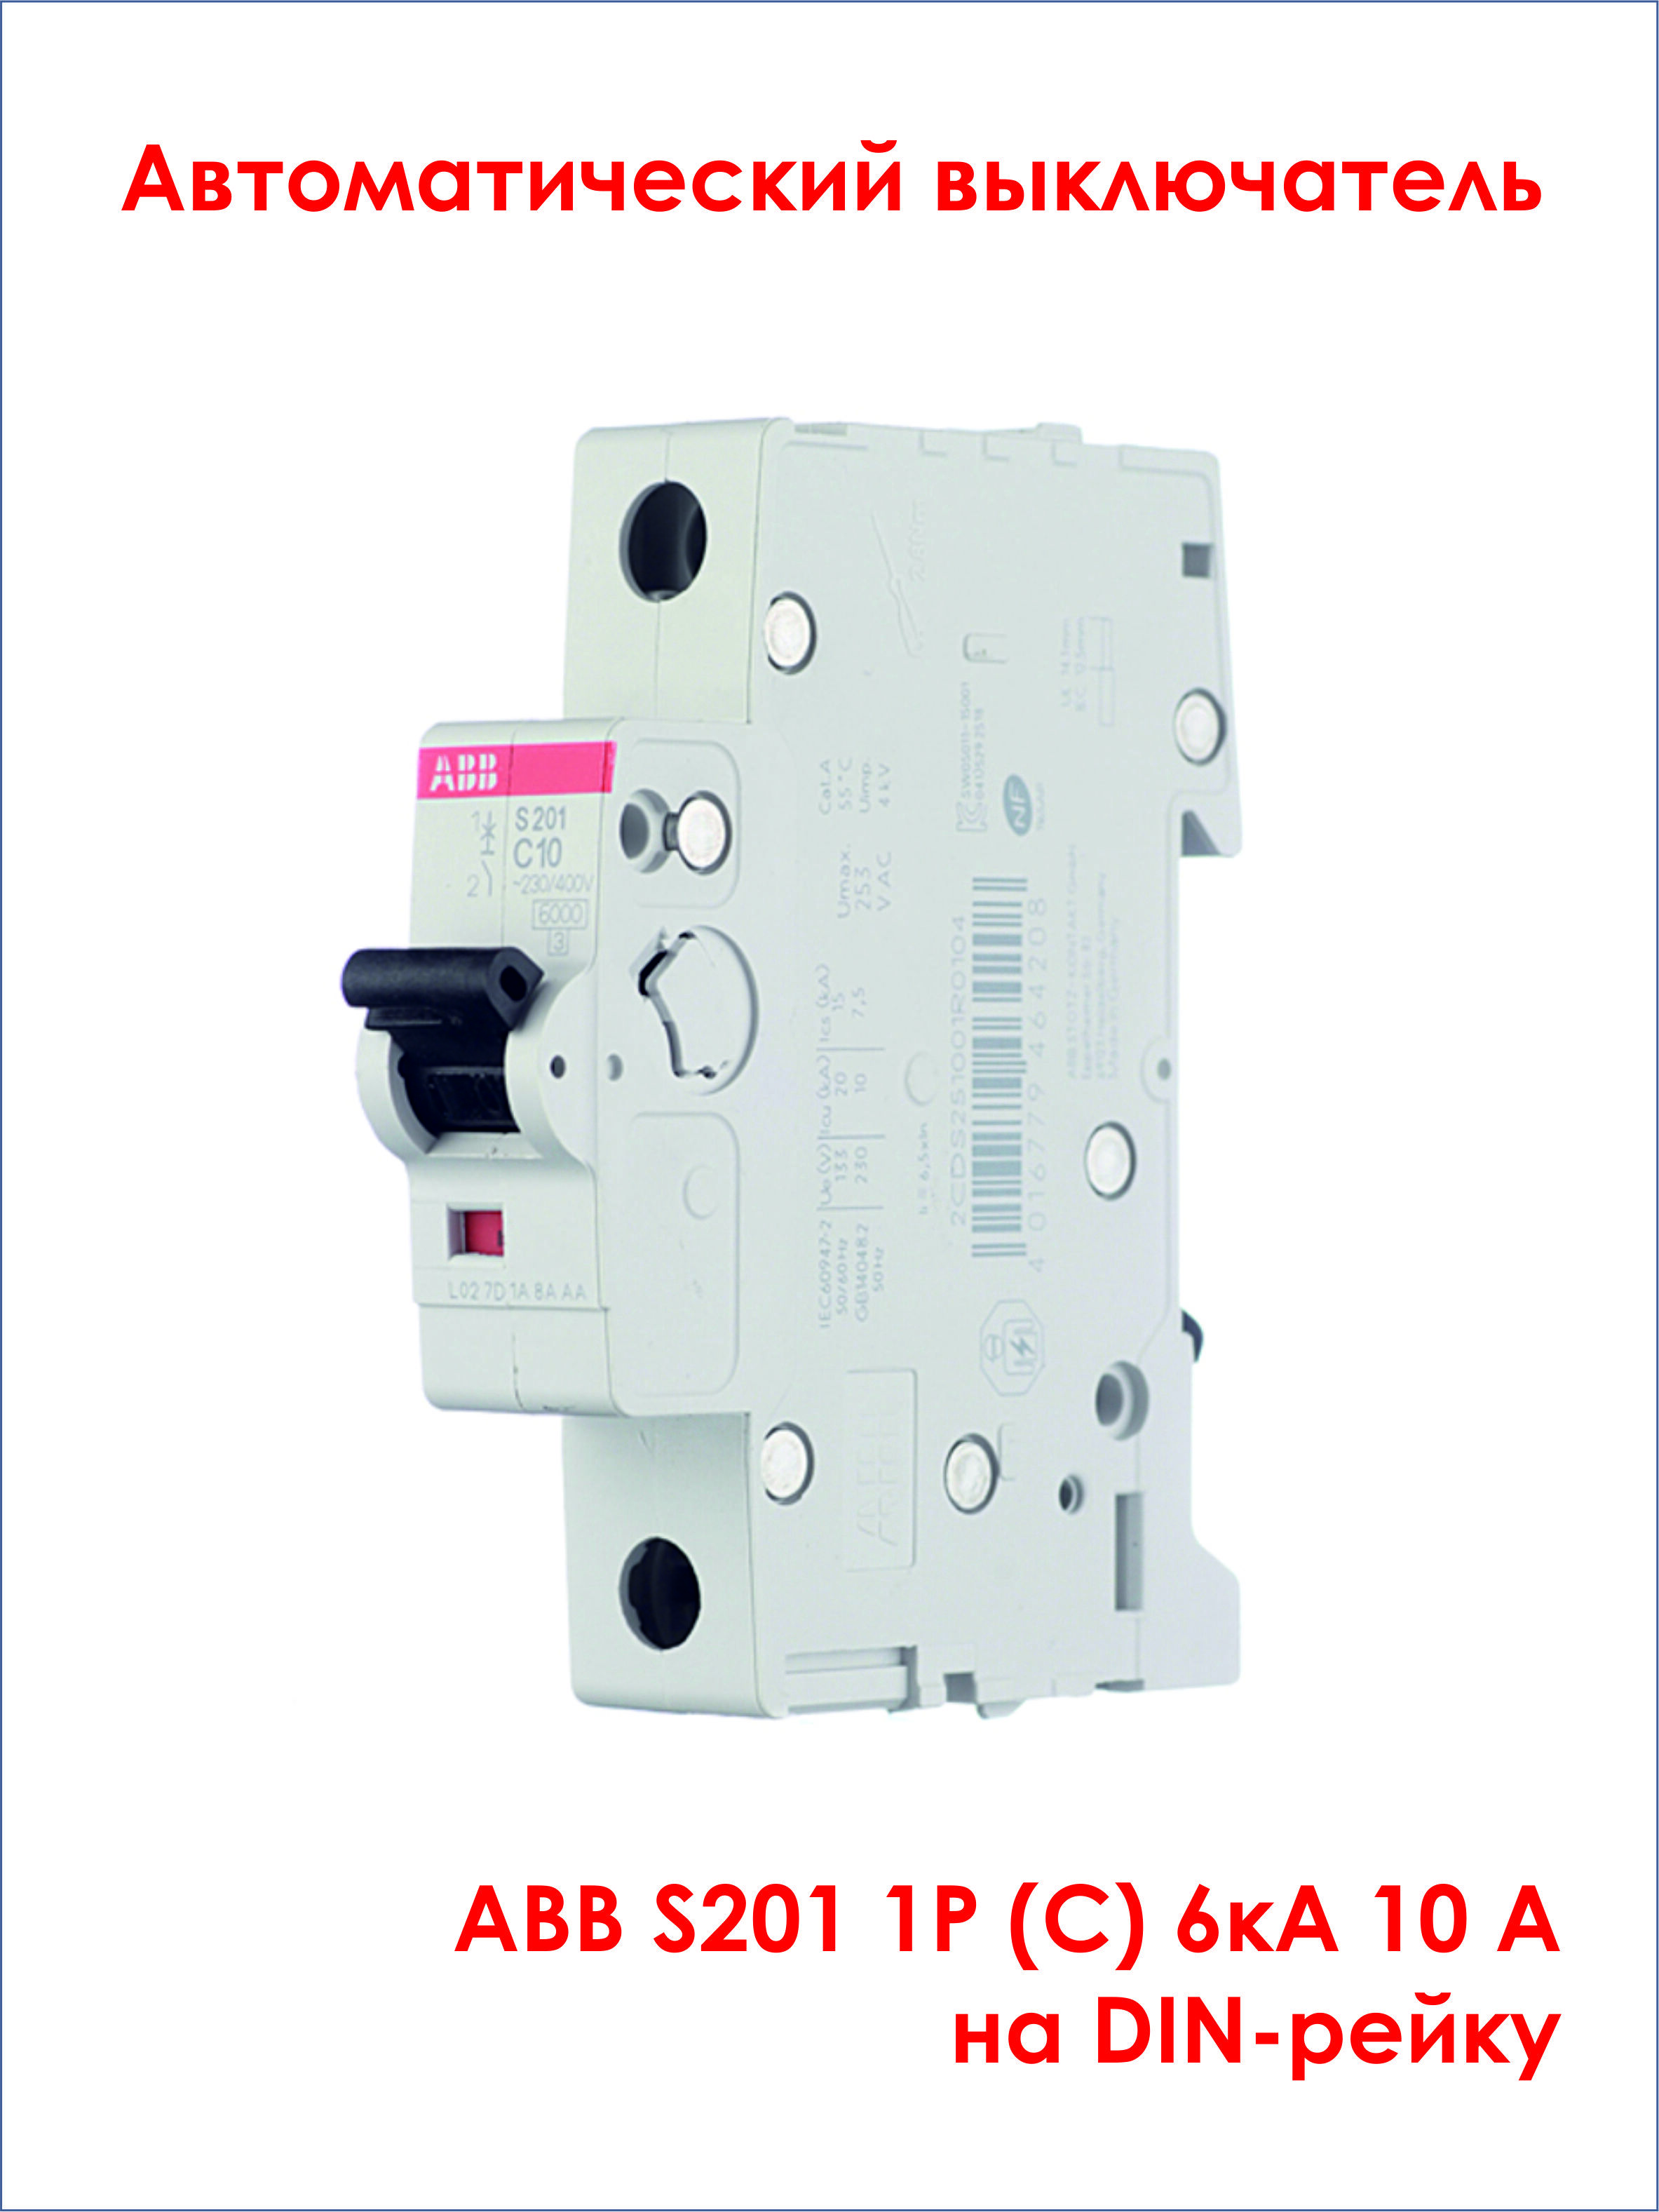 Автоматический выключатель abb 1 полюсный. ABB sh201. ABB sh 201 c25. ABB s201 c16. Автоматический выключатель ABB sh201 1p c16 а 6 ка 2cds211001r0164.